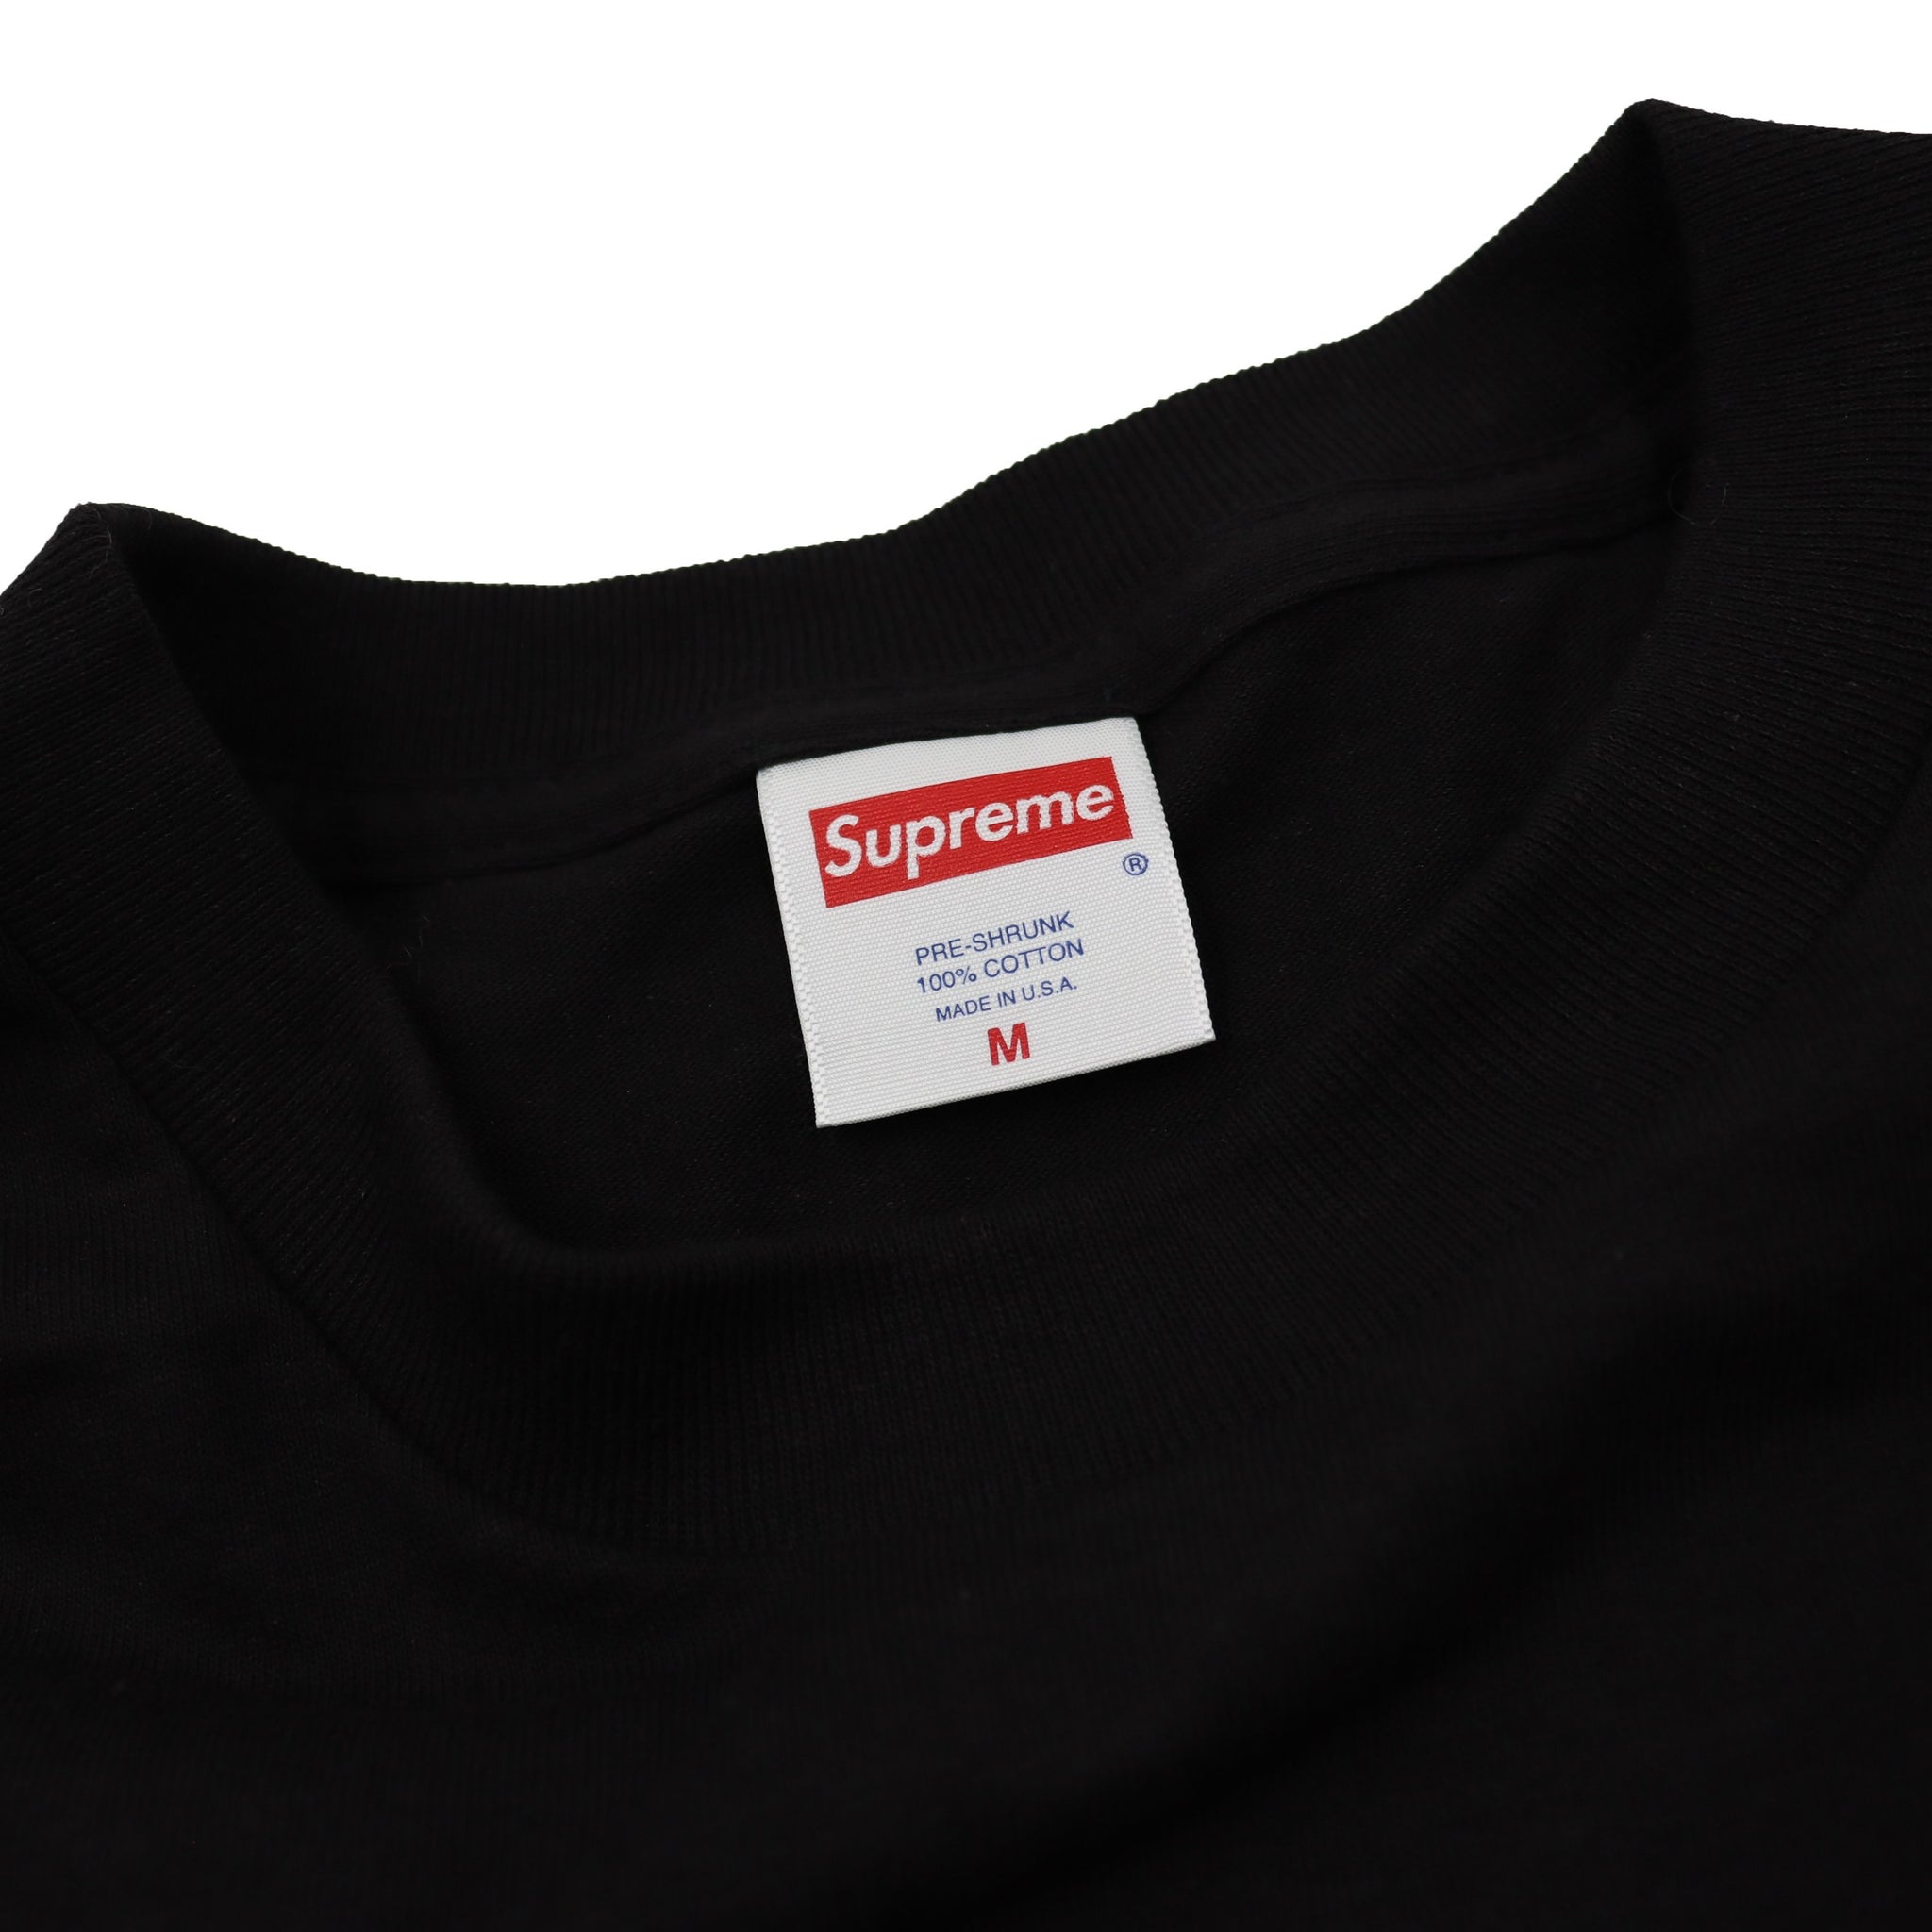 Asspizza X Supreme Triple Box Logo Shirt size M Red/White (also